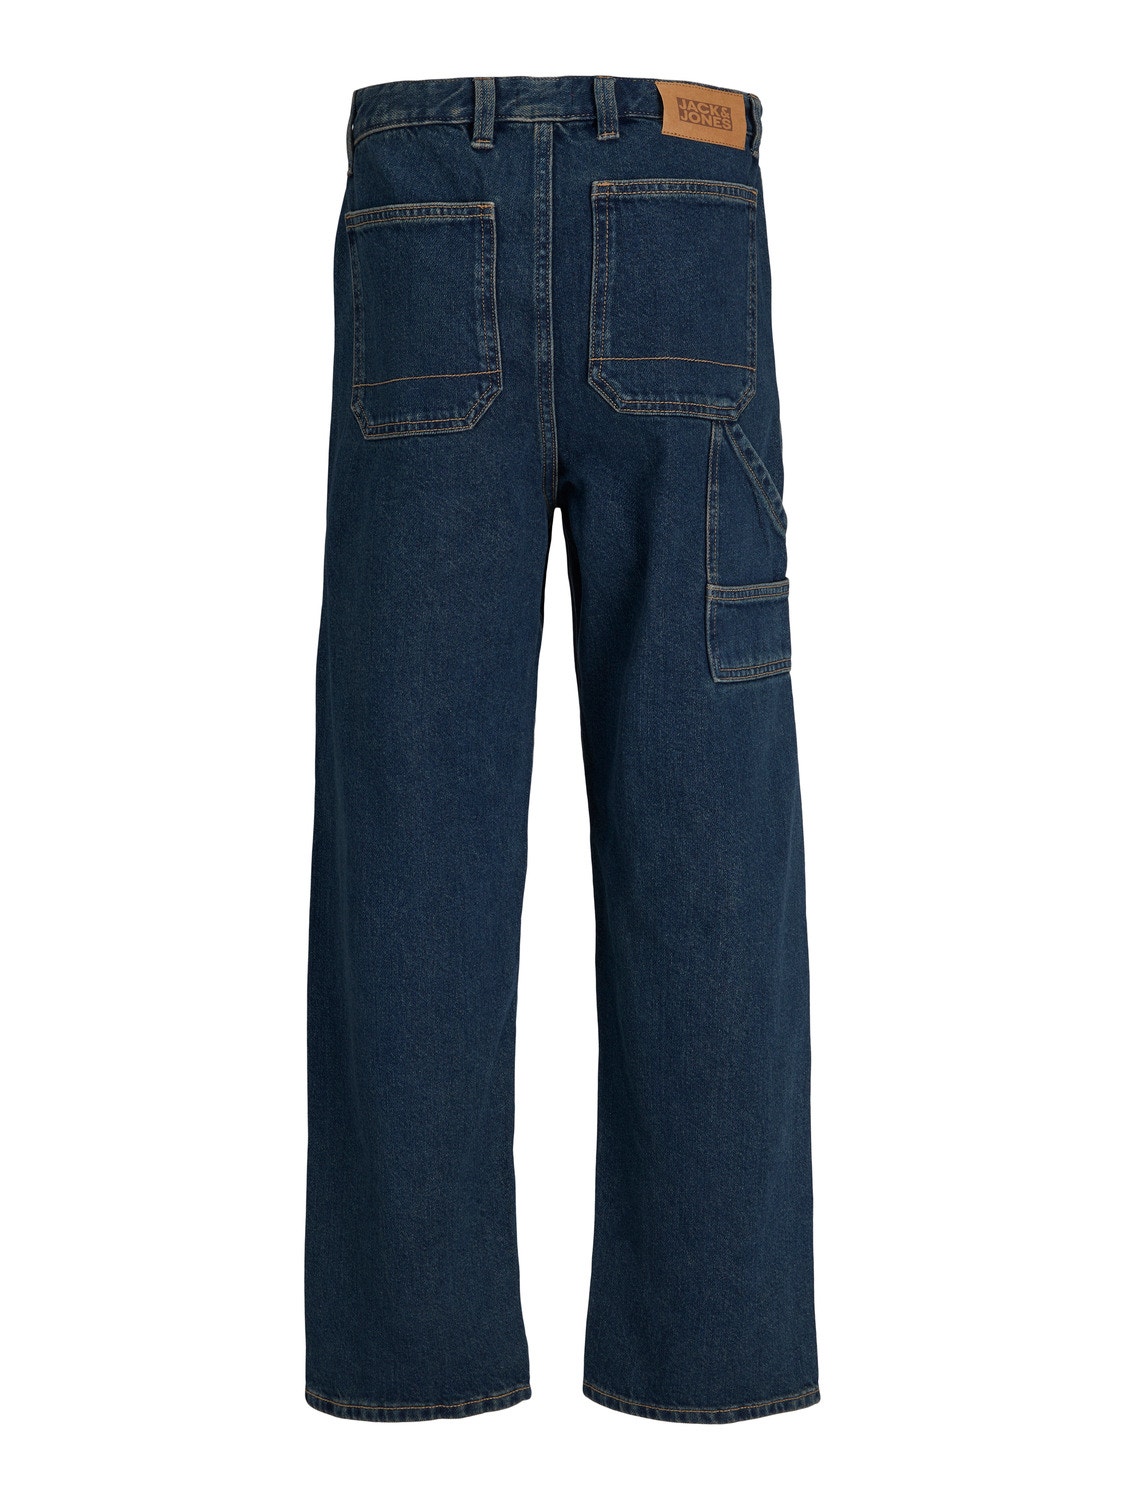 Jack & Jones JJICHRIS JJUTILITY MF 868 Relaxed Fit Jeans Für jungs -Blue Denim - 12247383